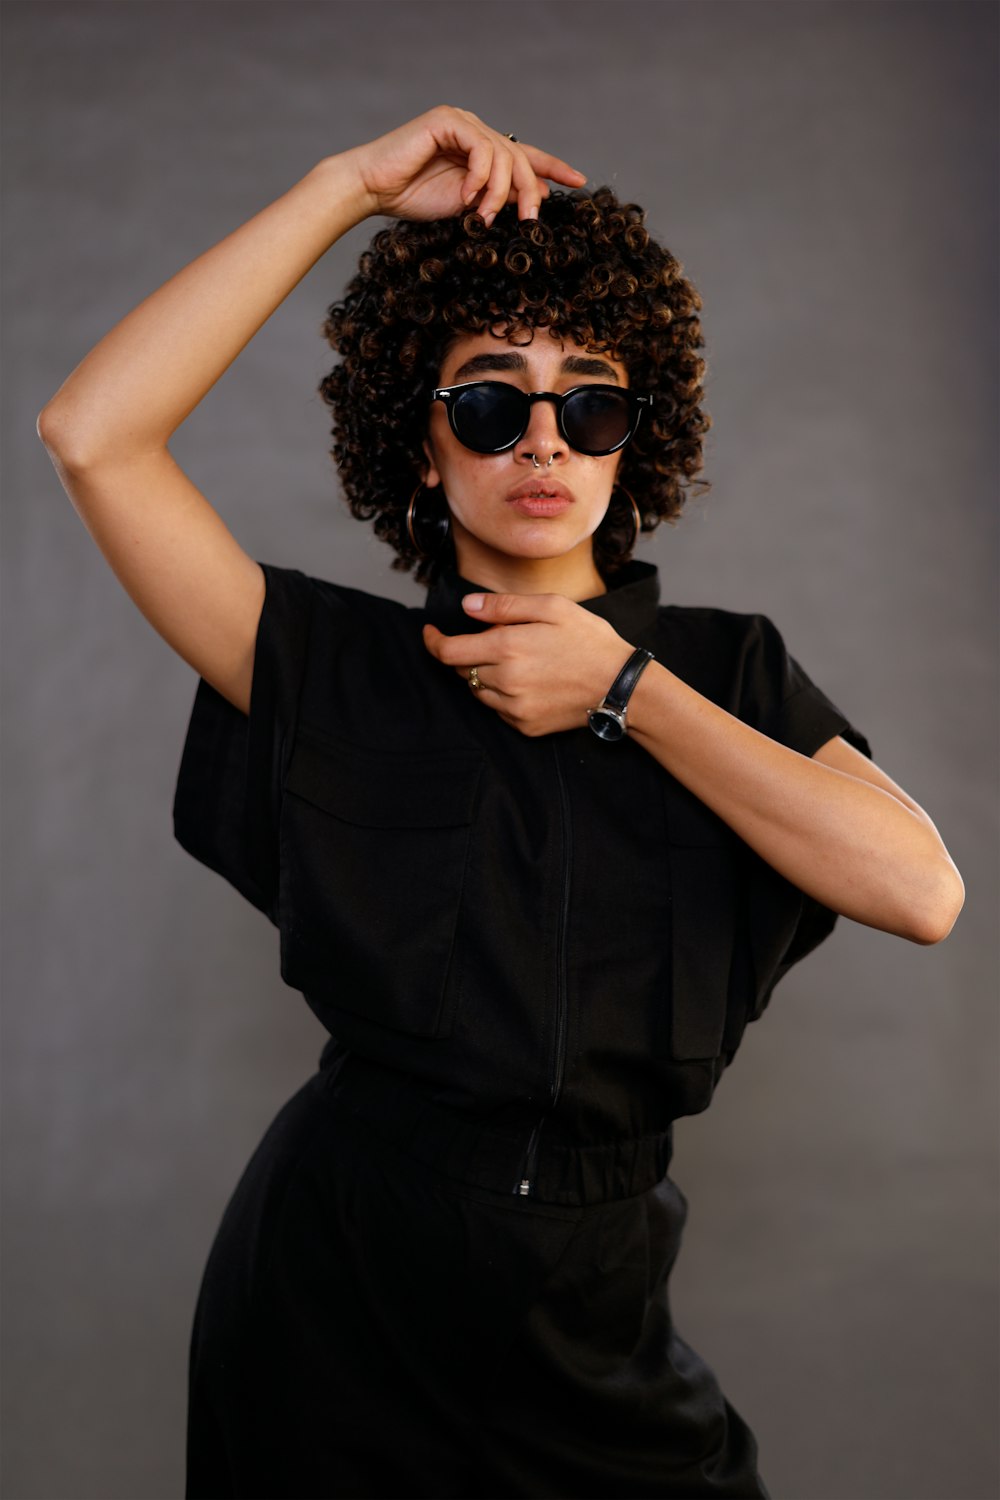 a woman wearing sunglasses and a black dress